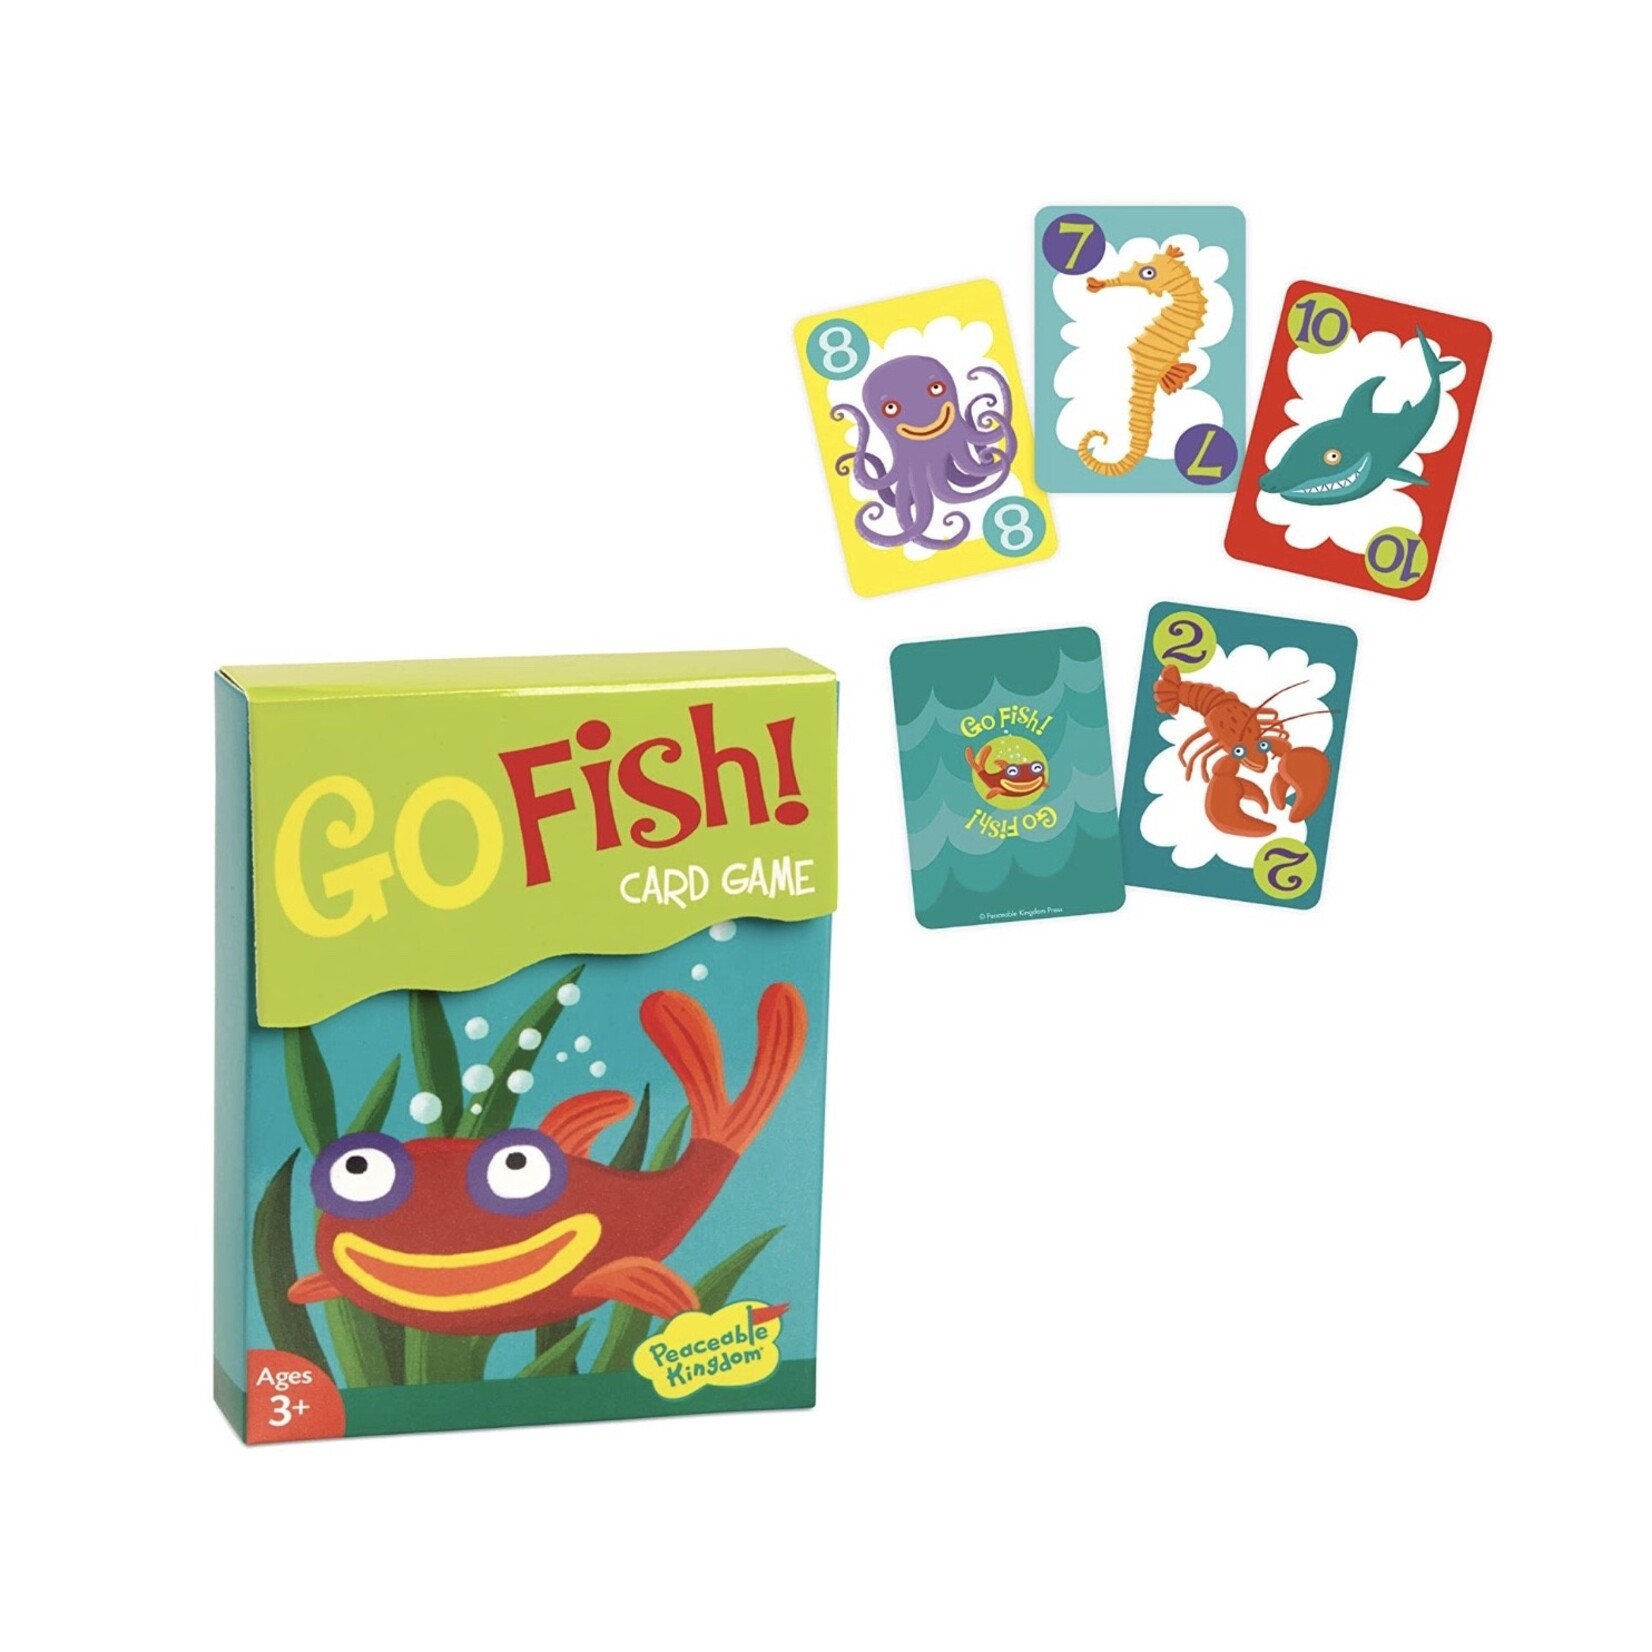 MindWare Card Game: Go Fish